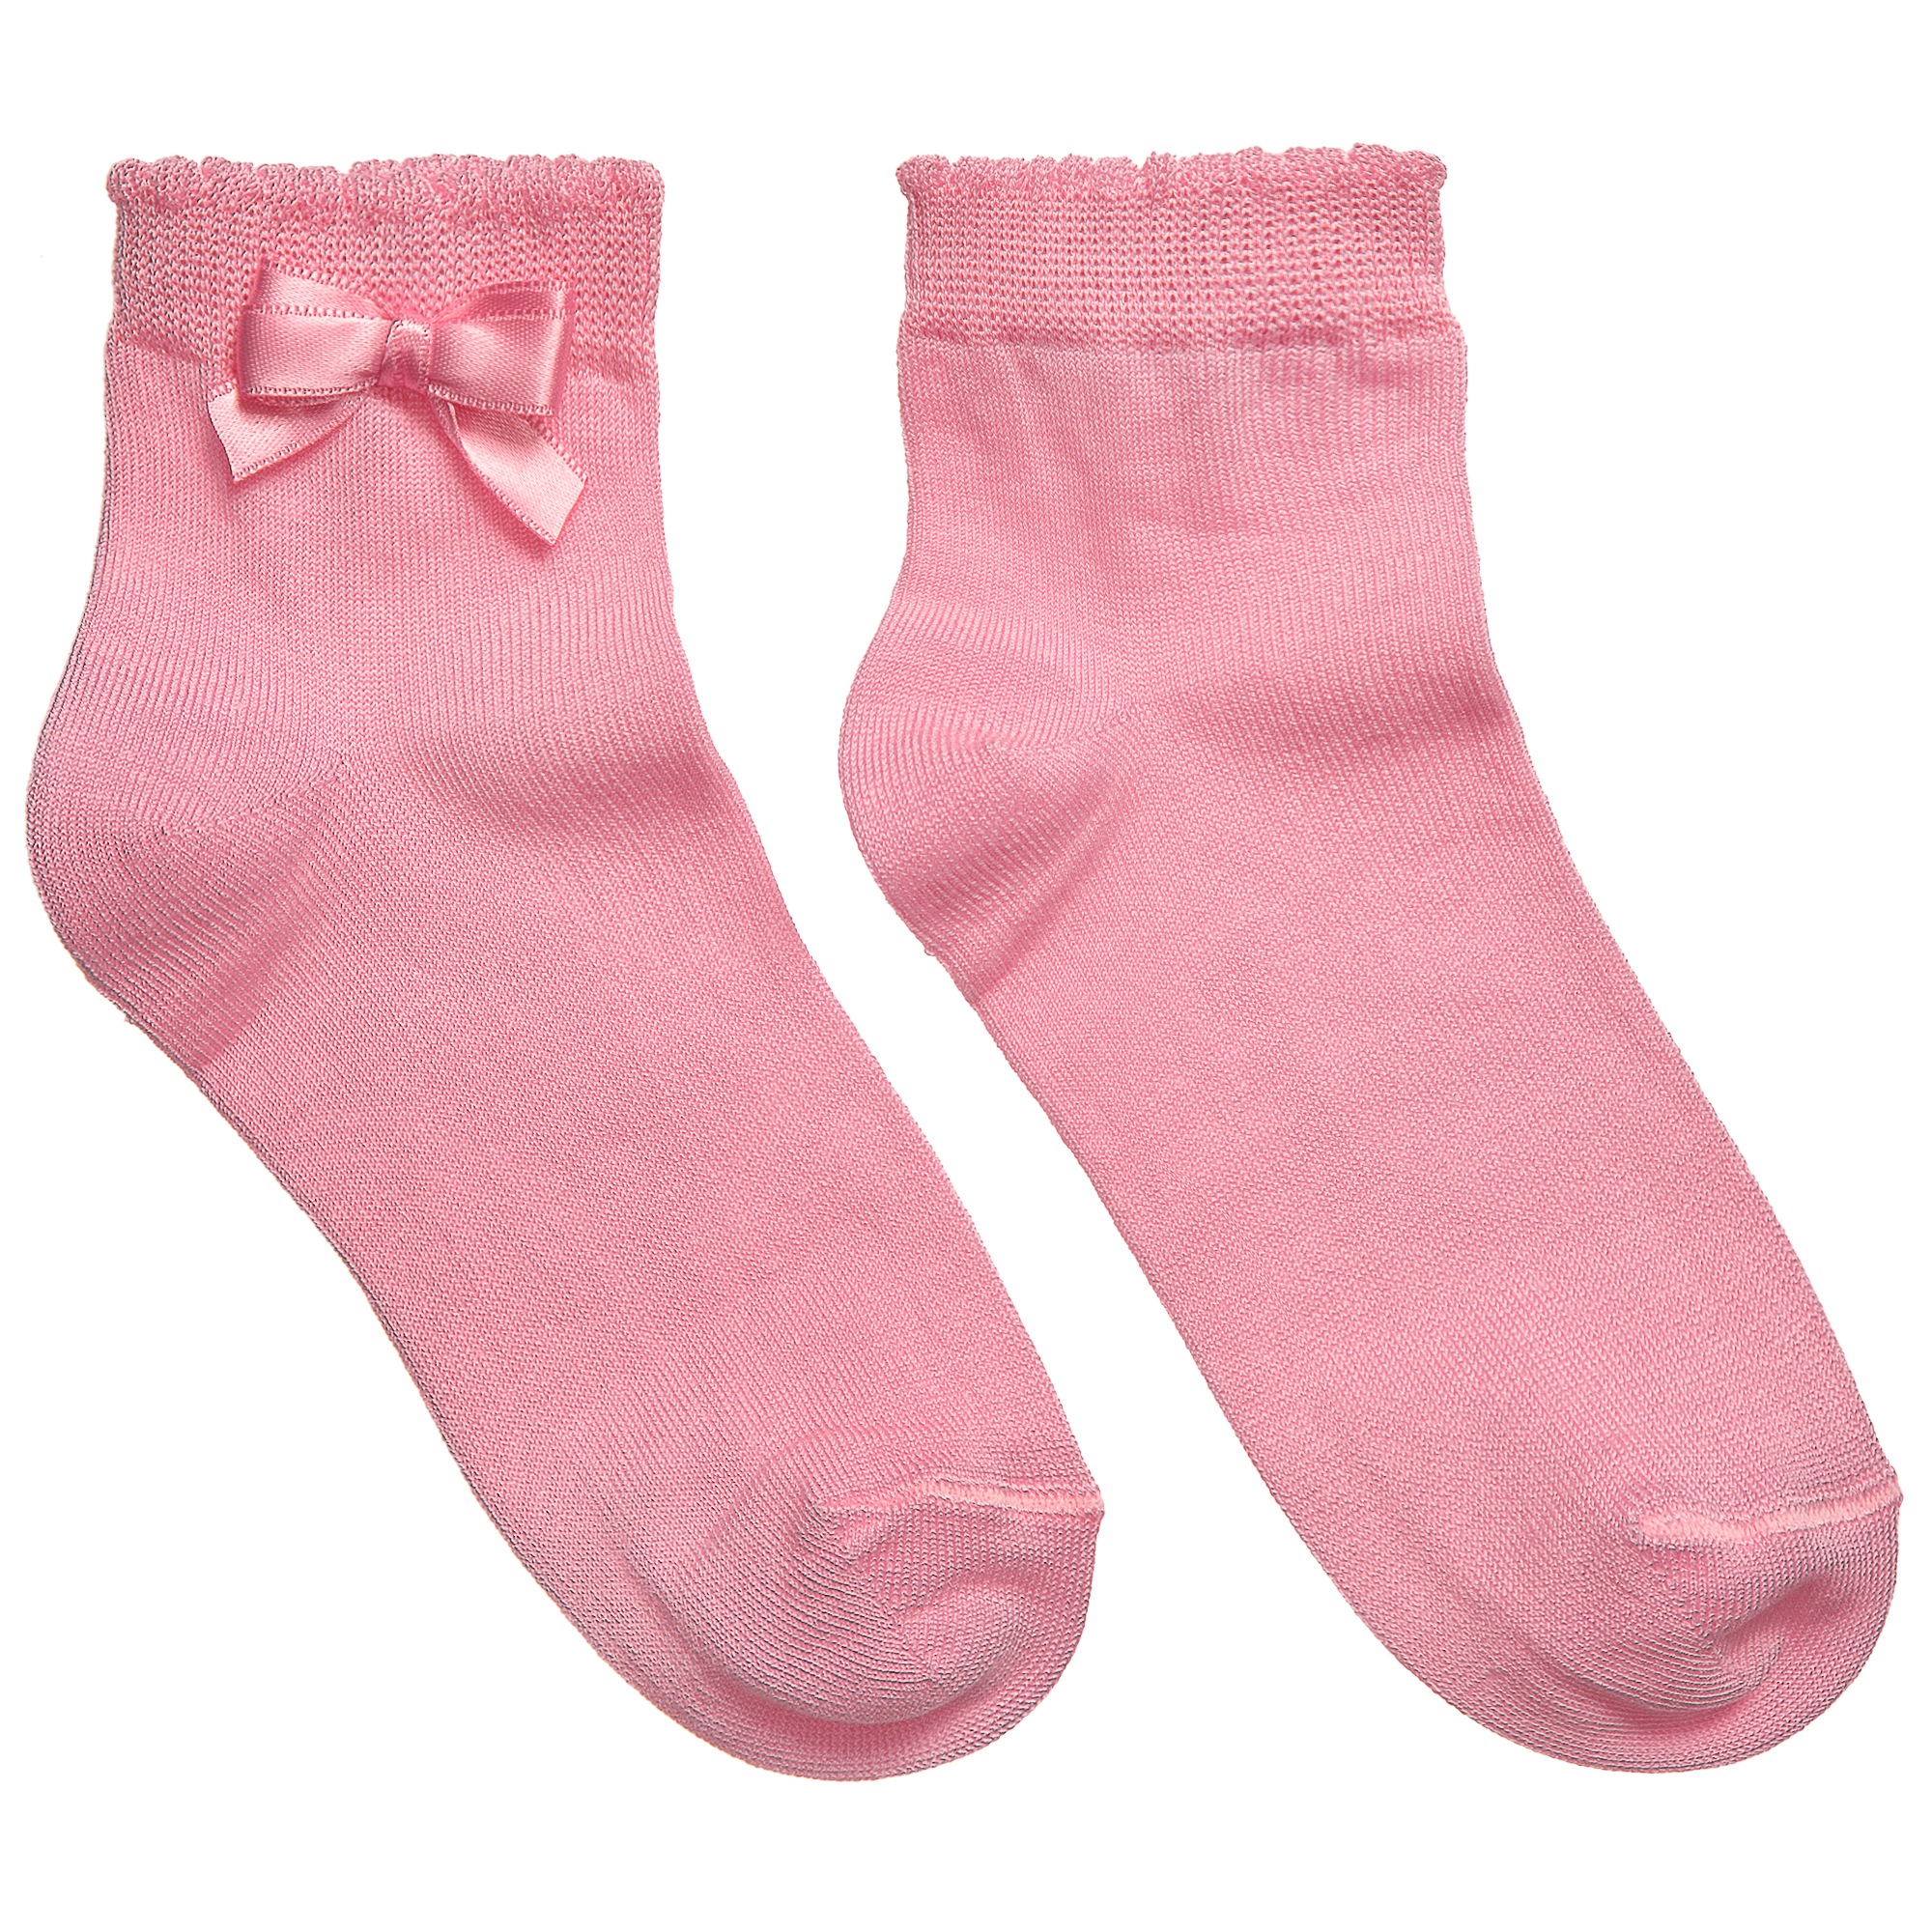 Girls pink socks by Story Loris. 